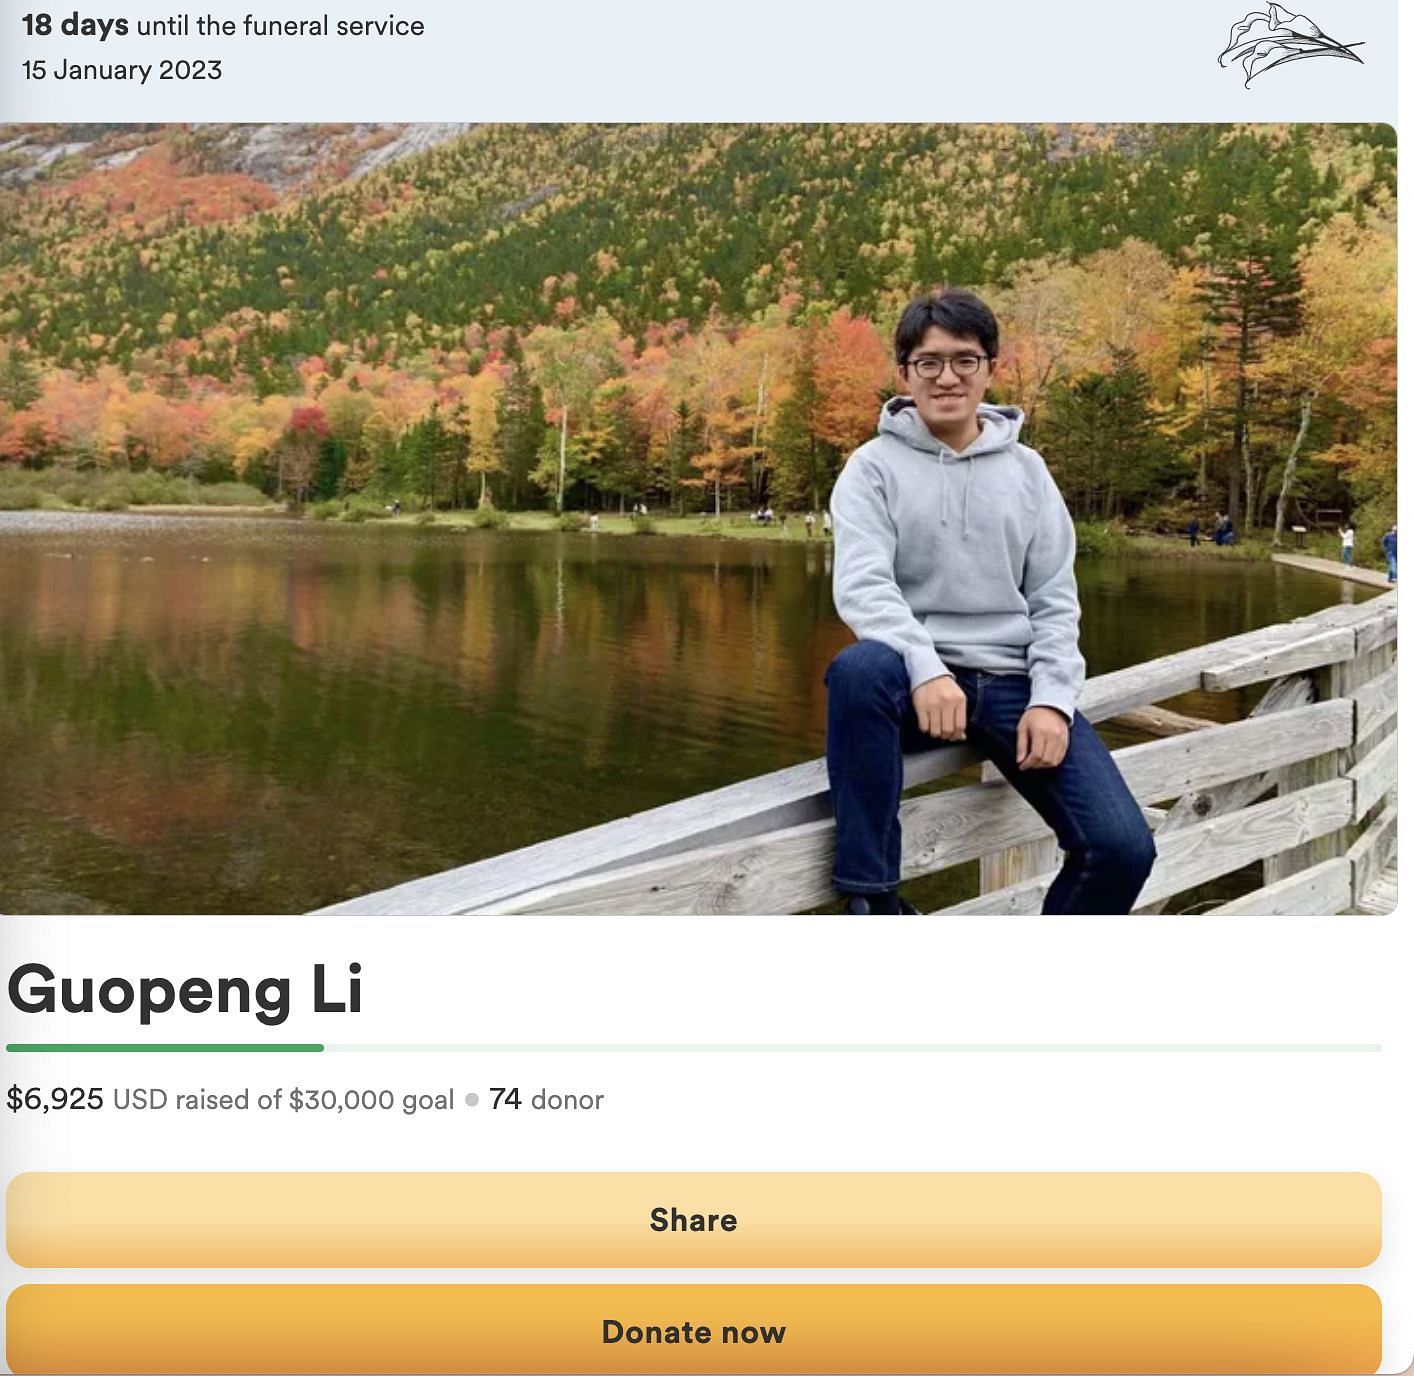 The GoFundMe page set up for the NH trekker has raised $6,925 in 2 days. (Image via GoFundMe)